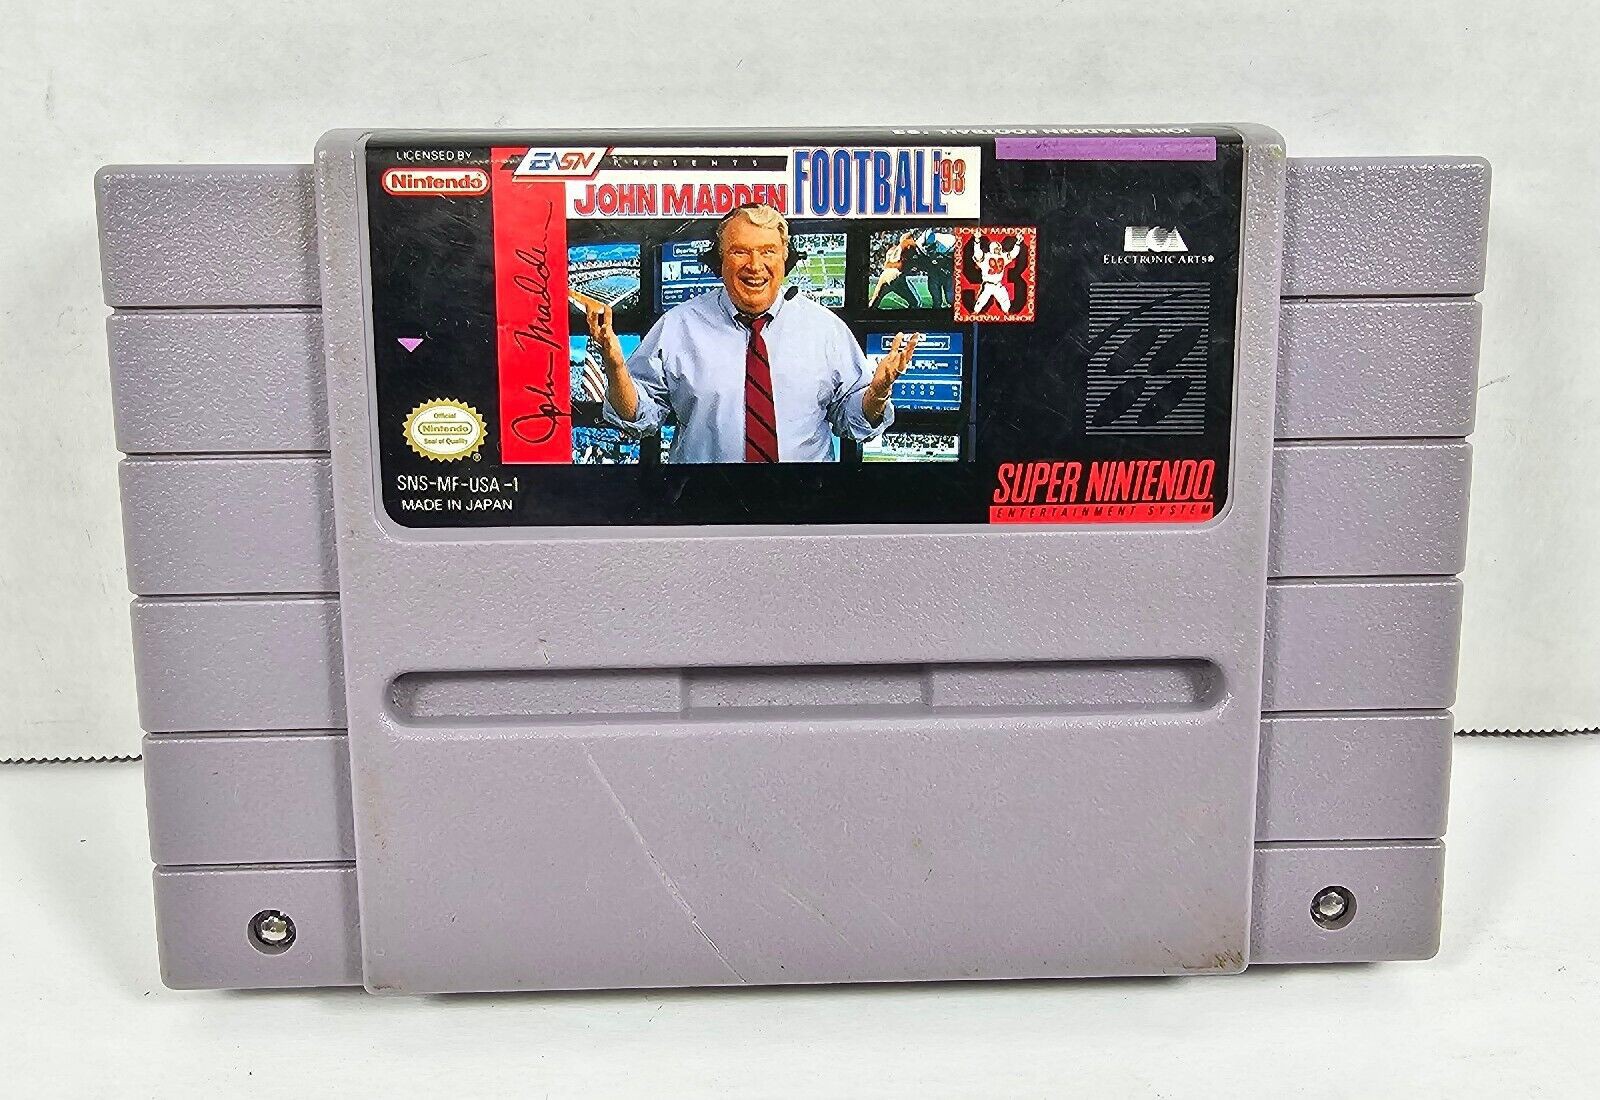 John Madden Footbal '93 (NTSC) - Super Nintendo Games